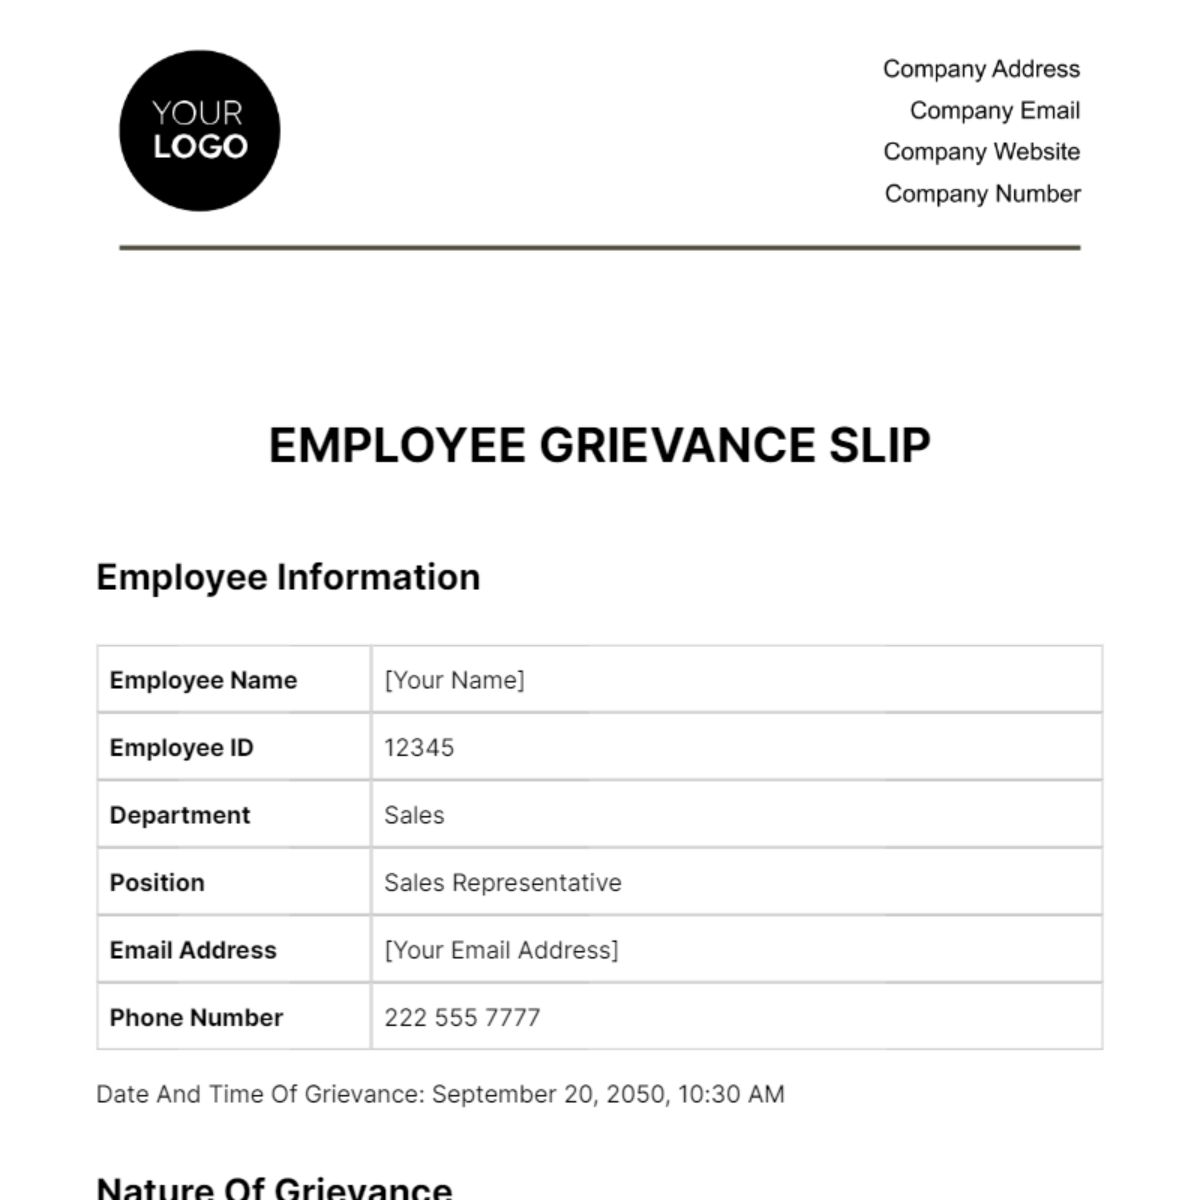 Employee Grievance Slip HR Template